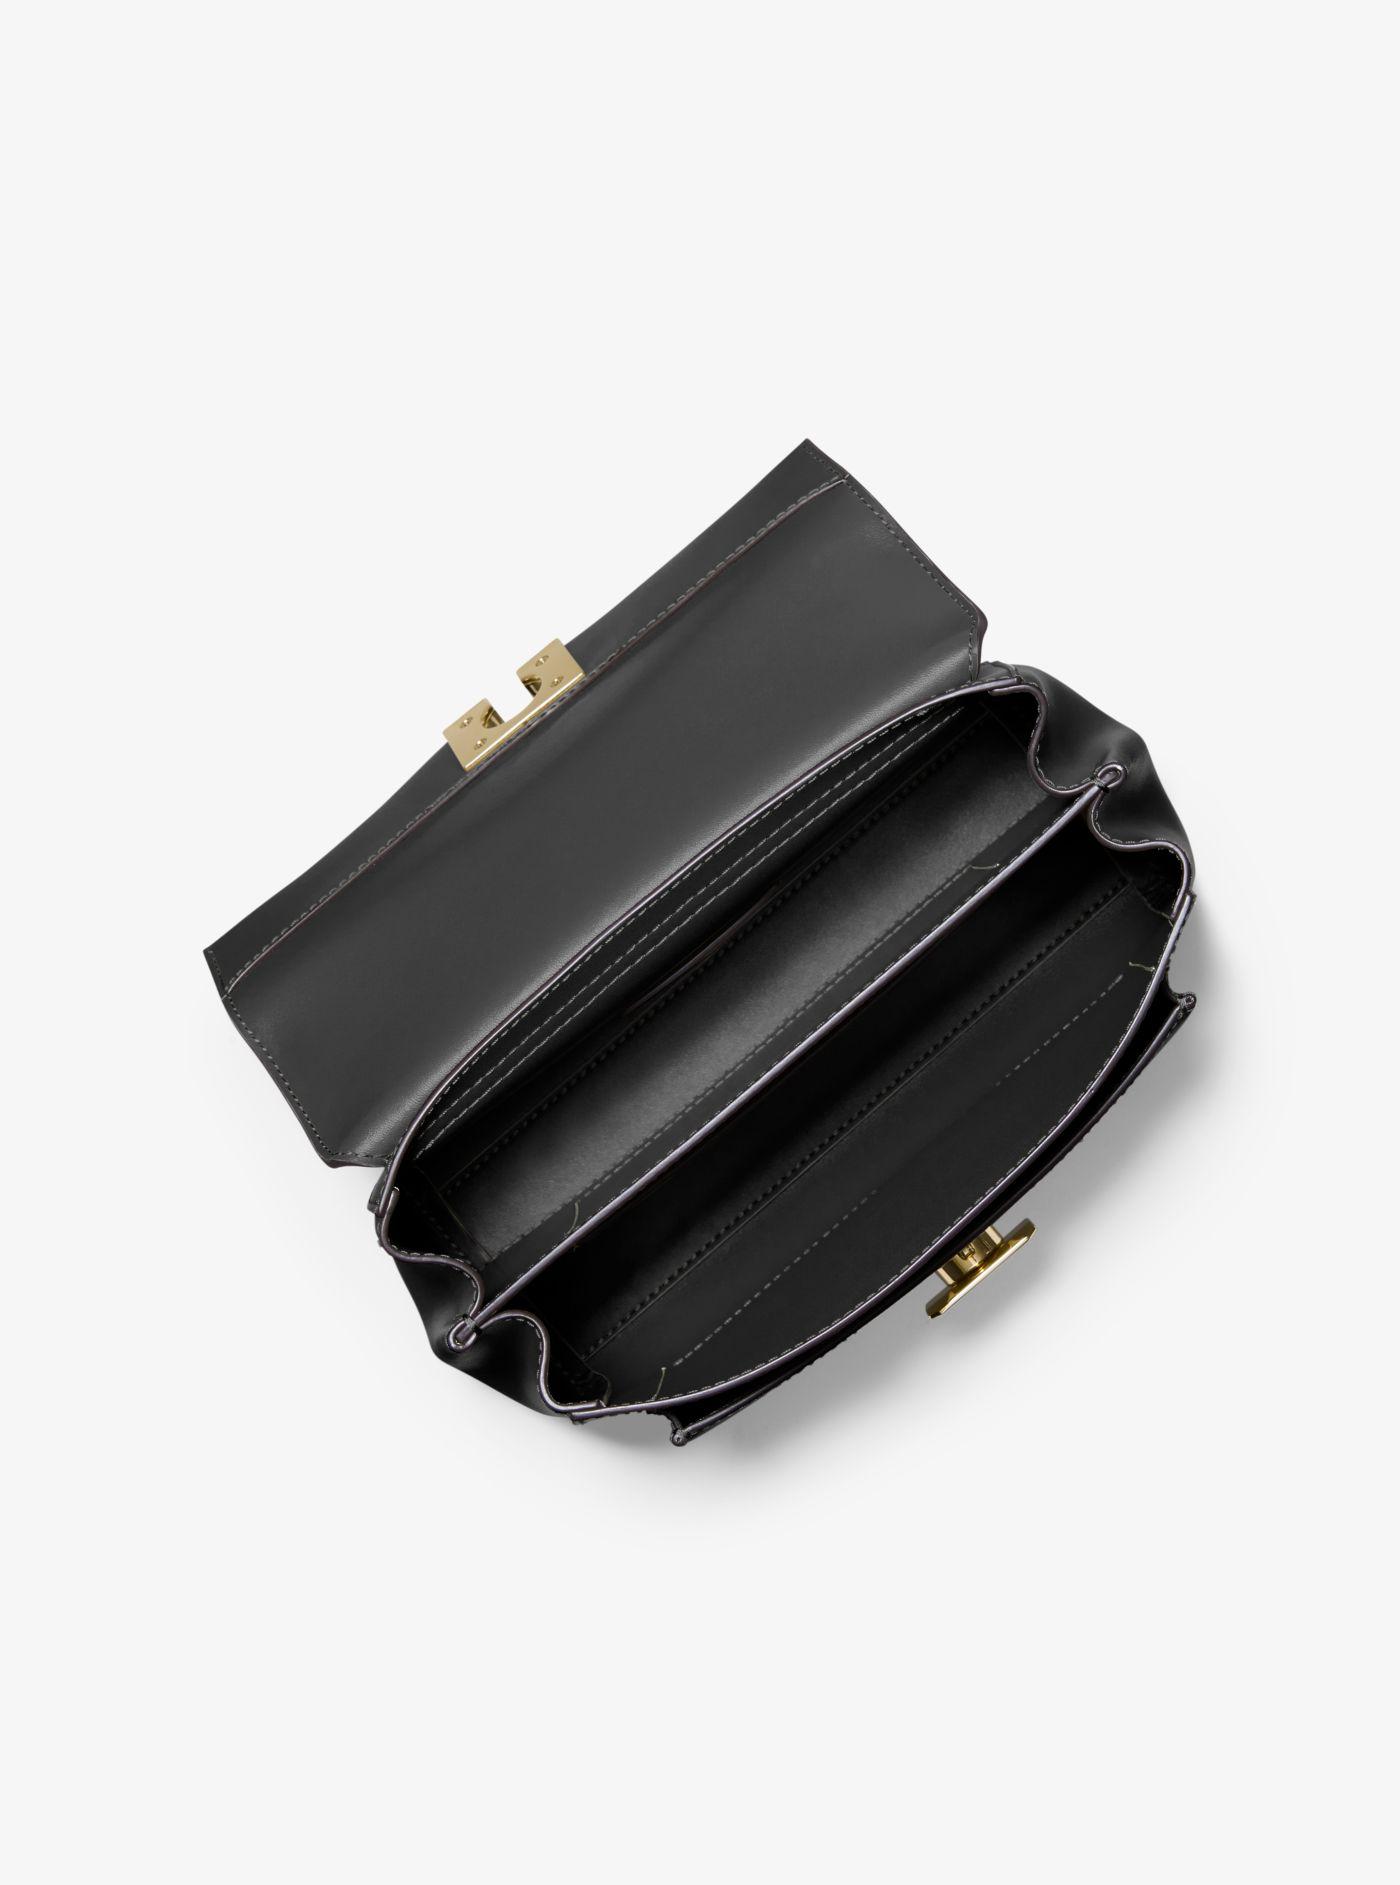 Michael Kors Lita Medium Leather Crossbody Bag in Black - Lyst